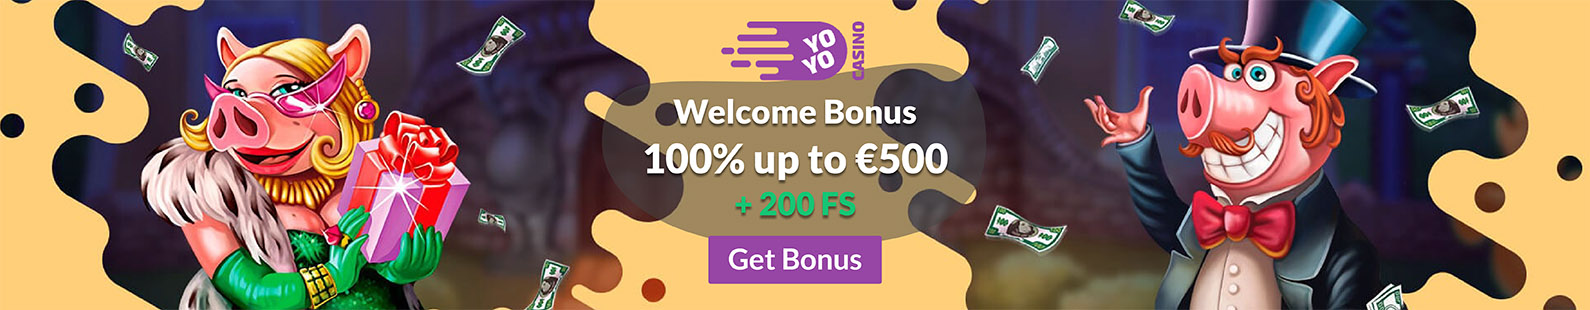 Yoyo Casino Welcome Bonus of €500 - Big